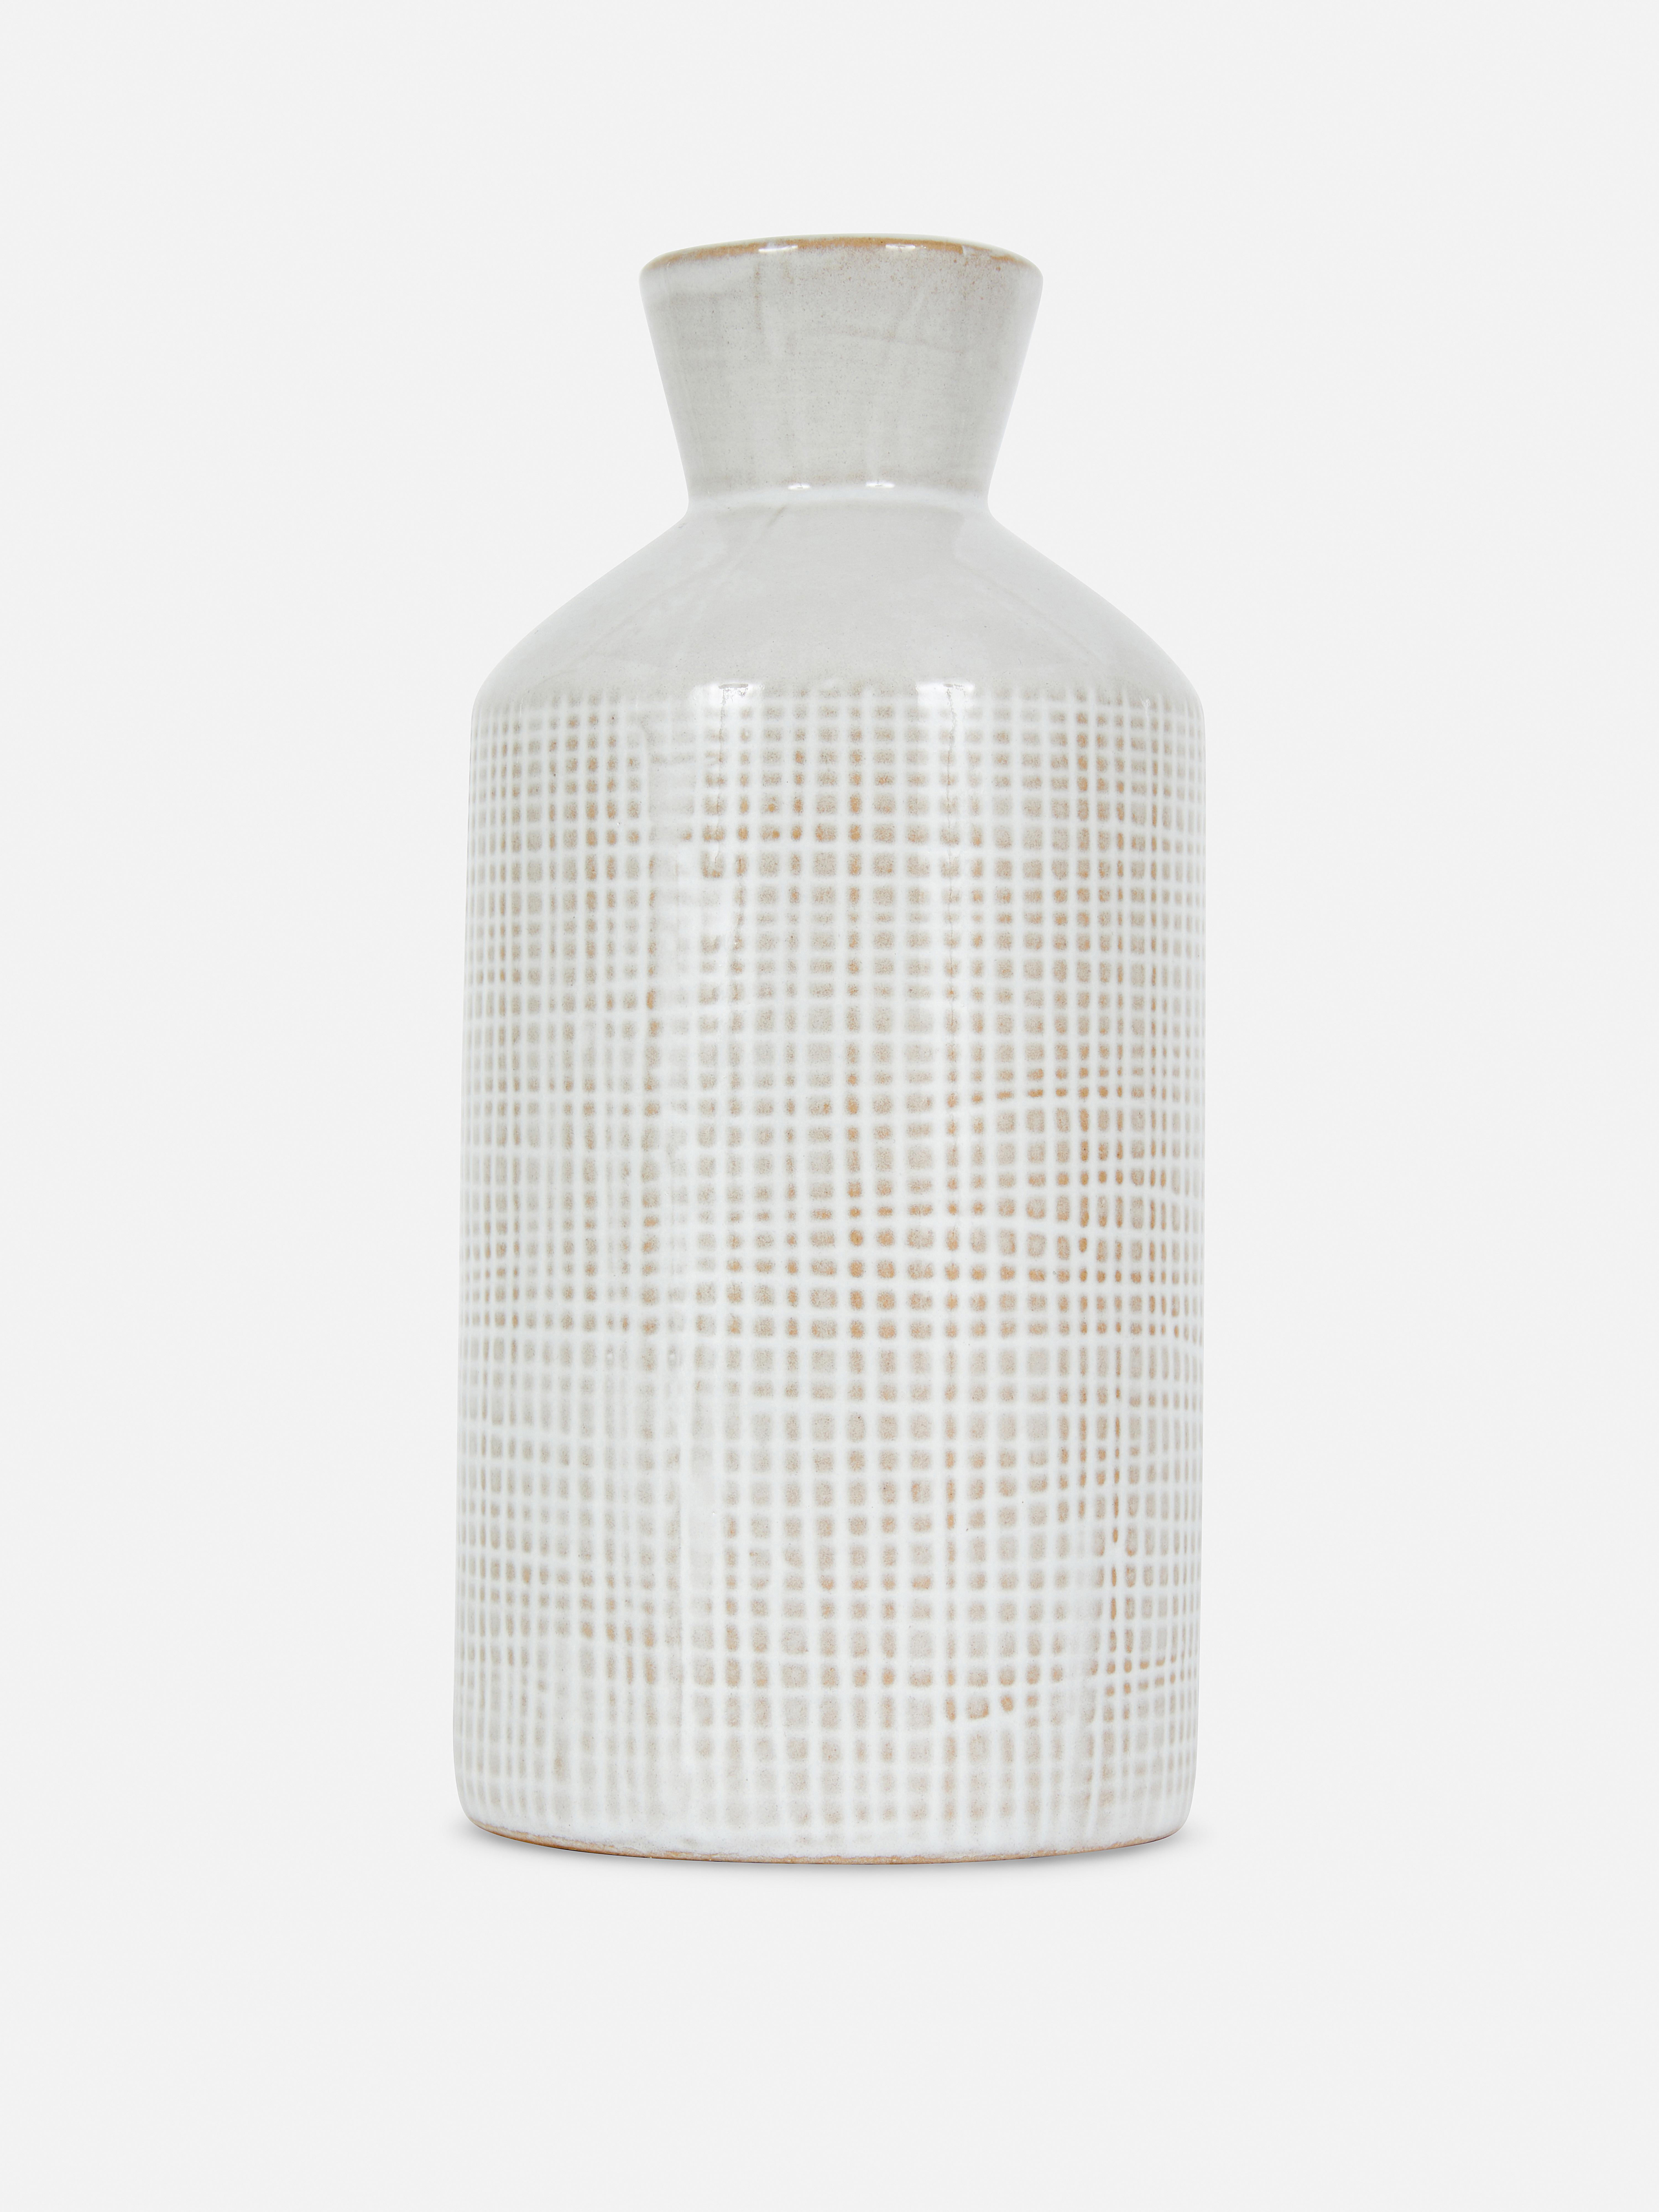 Bottle Neck Ceramic Vase